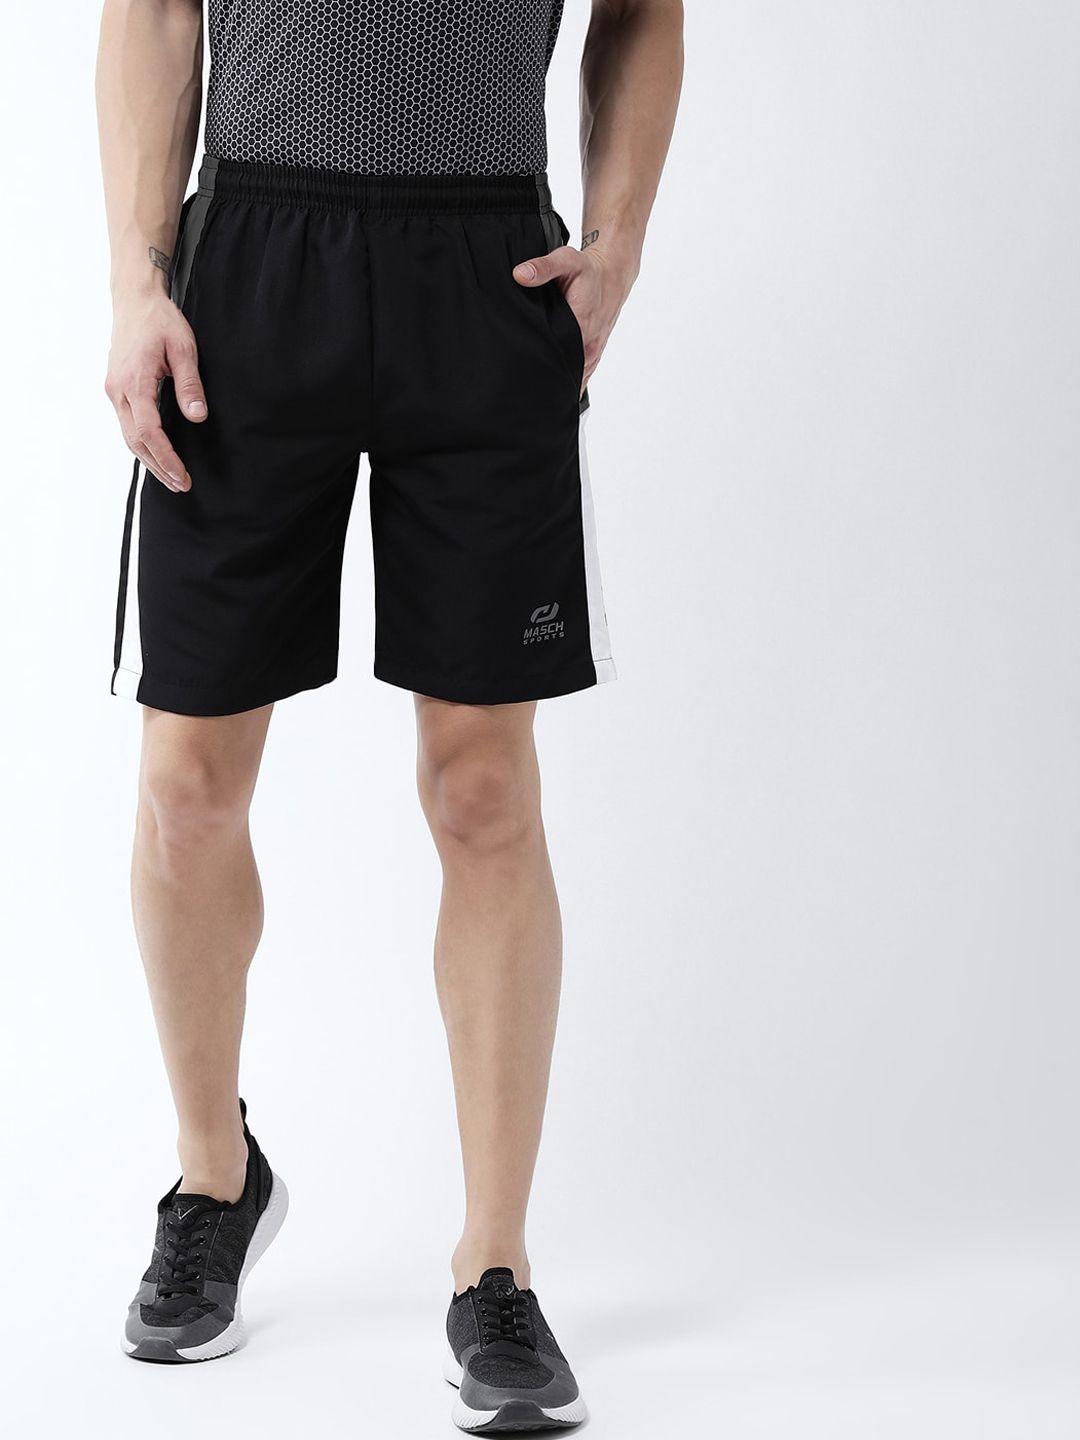 masch-sports-men-black-training-or-gym-dri-fit-sports-shorts